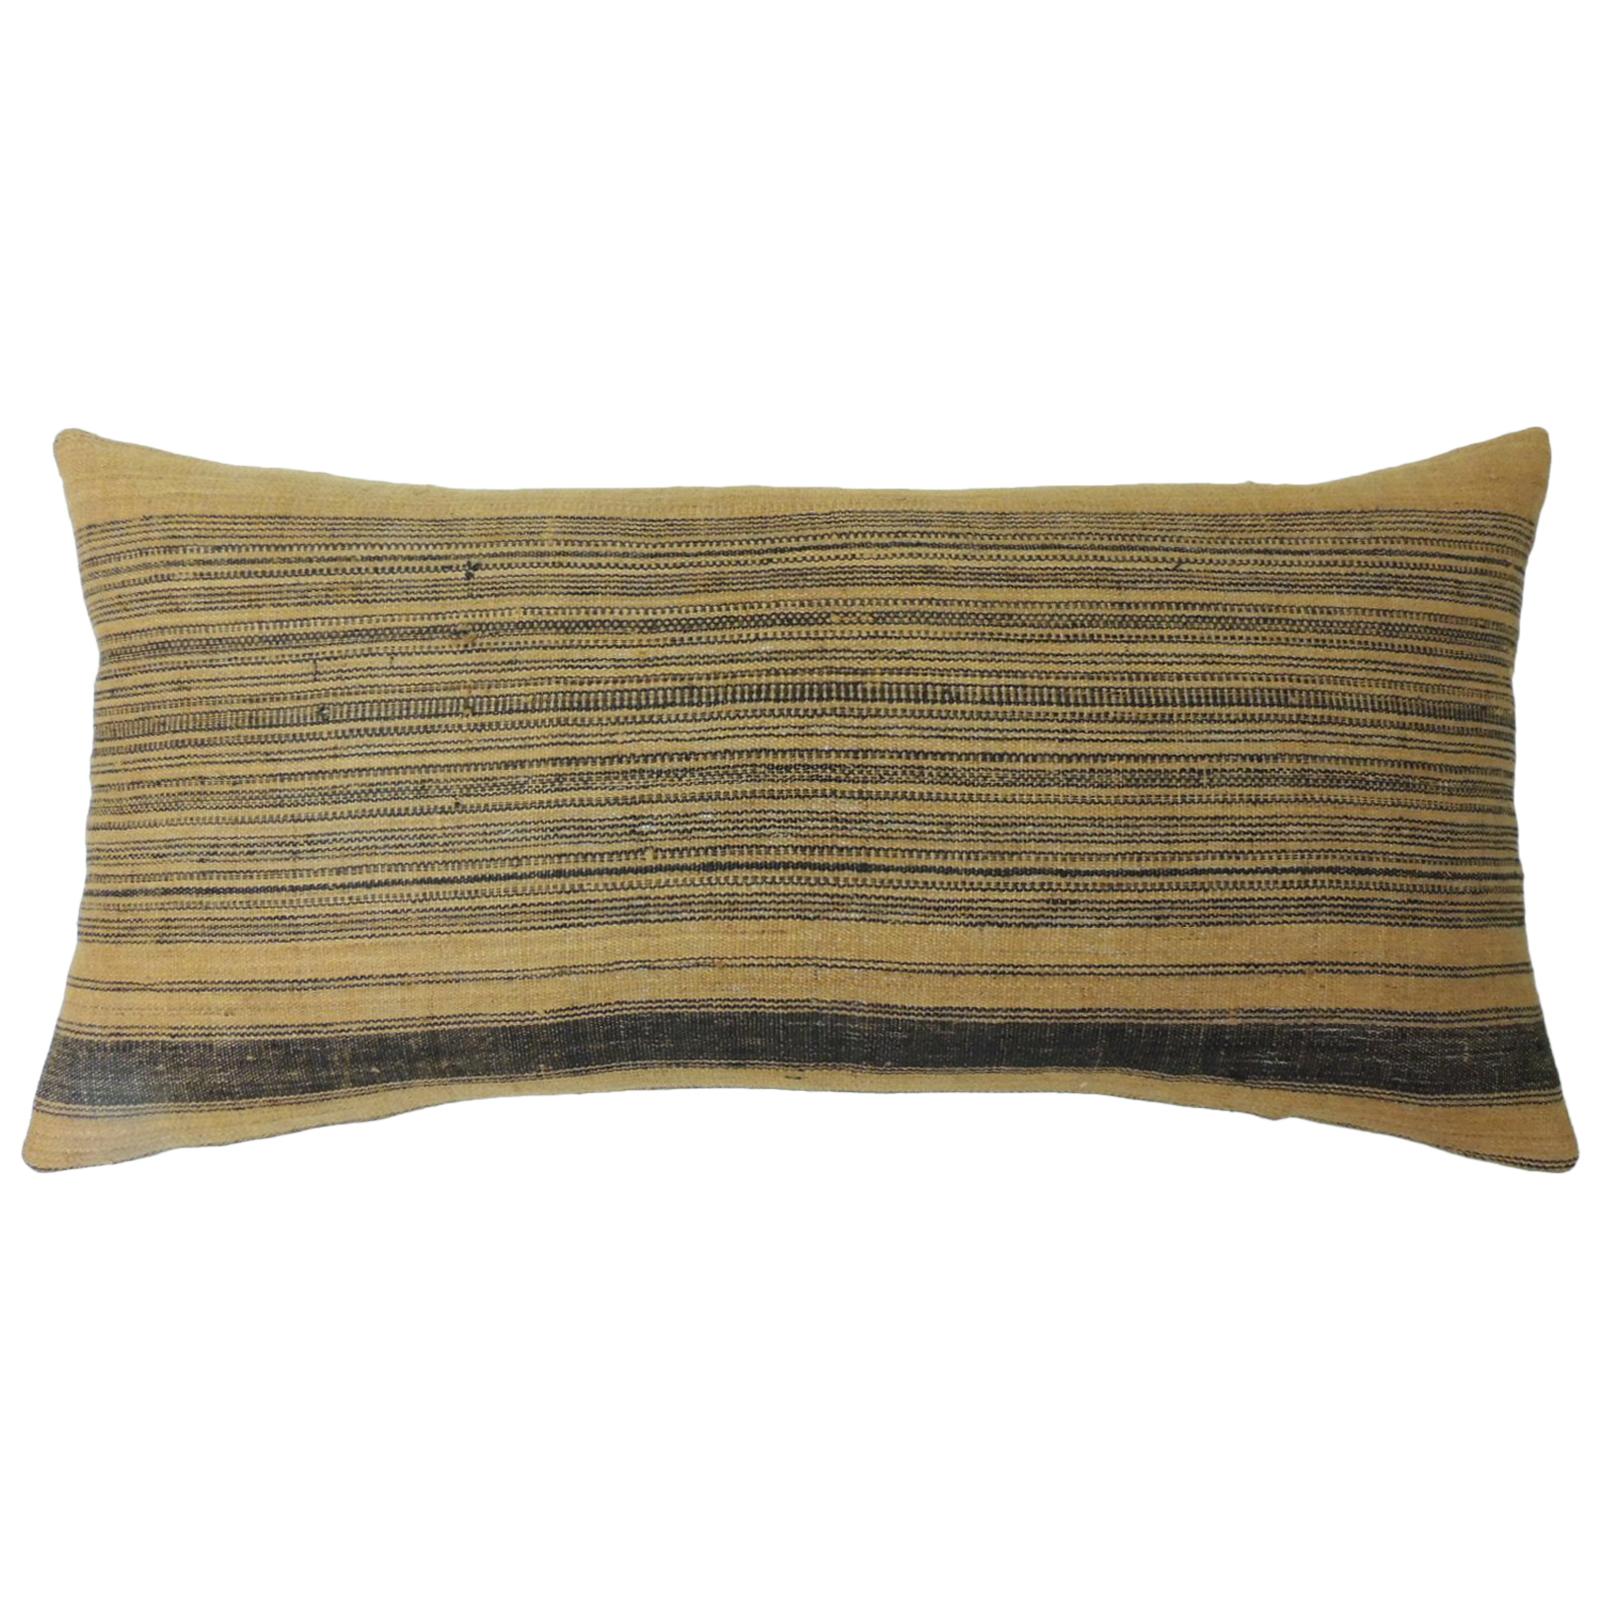 Asian Orange and Brown Woven "Melati" Stripes Decorative Bolster Pillow